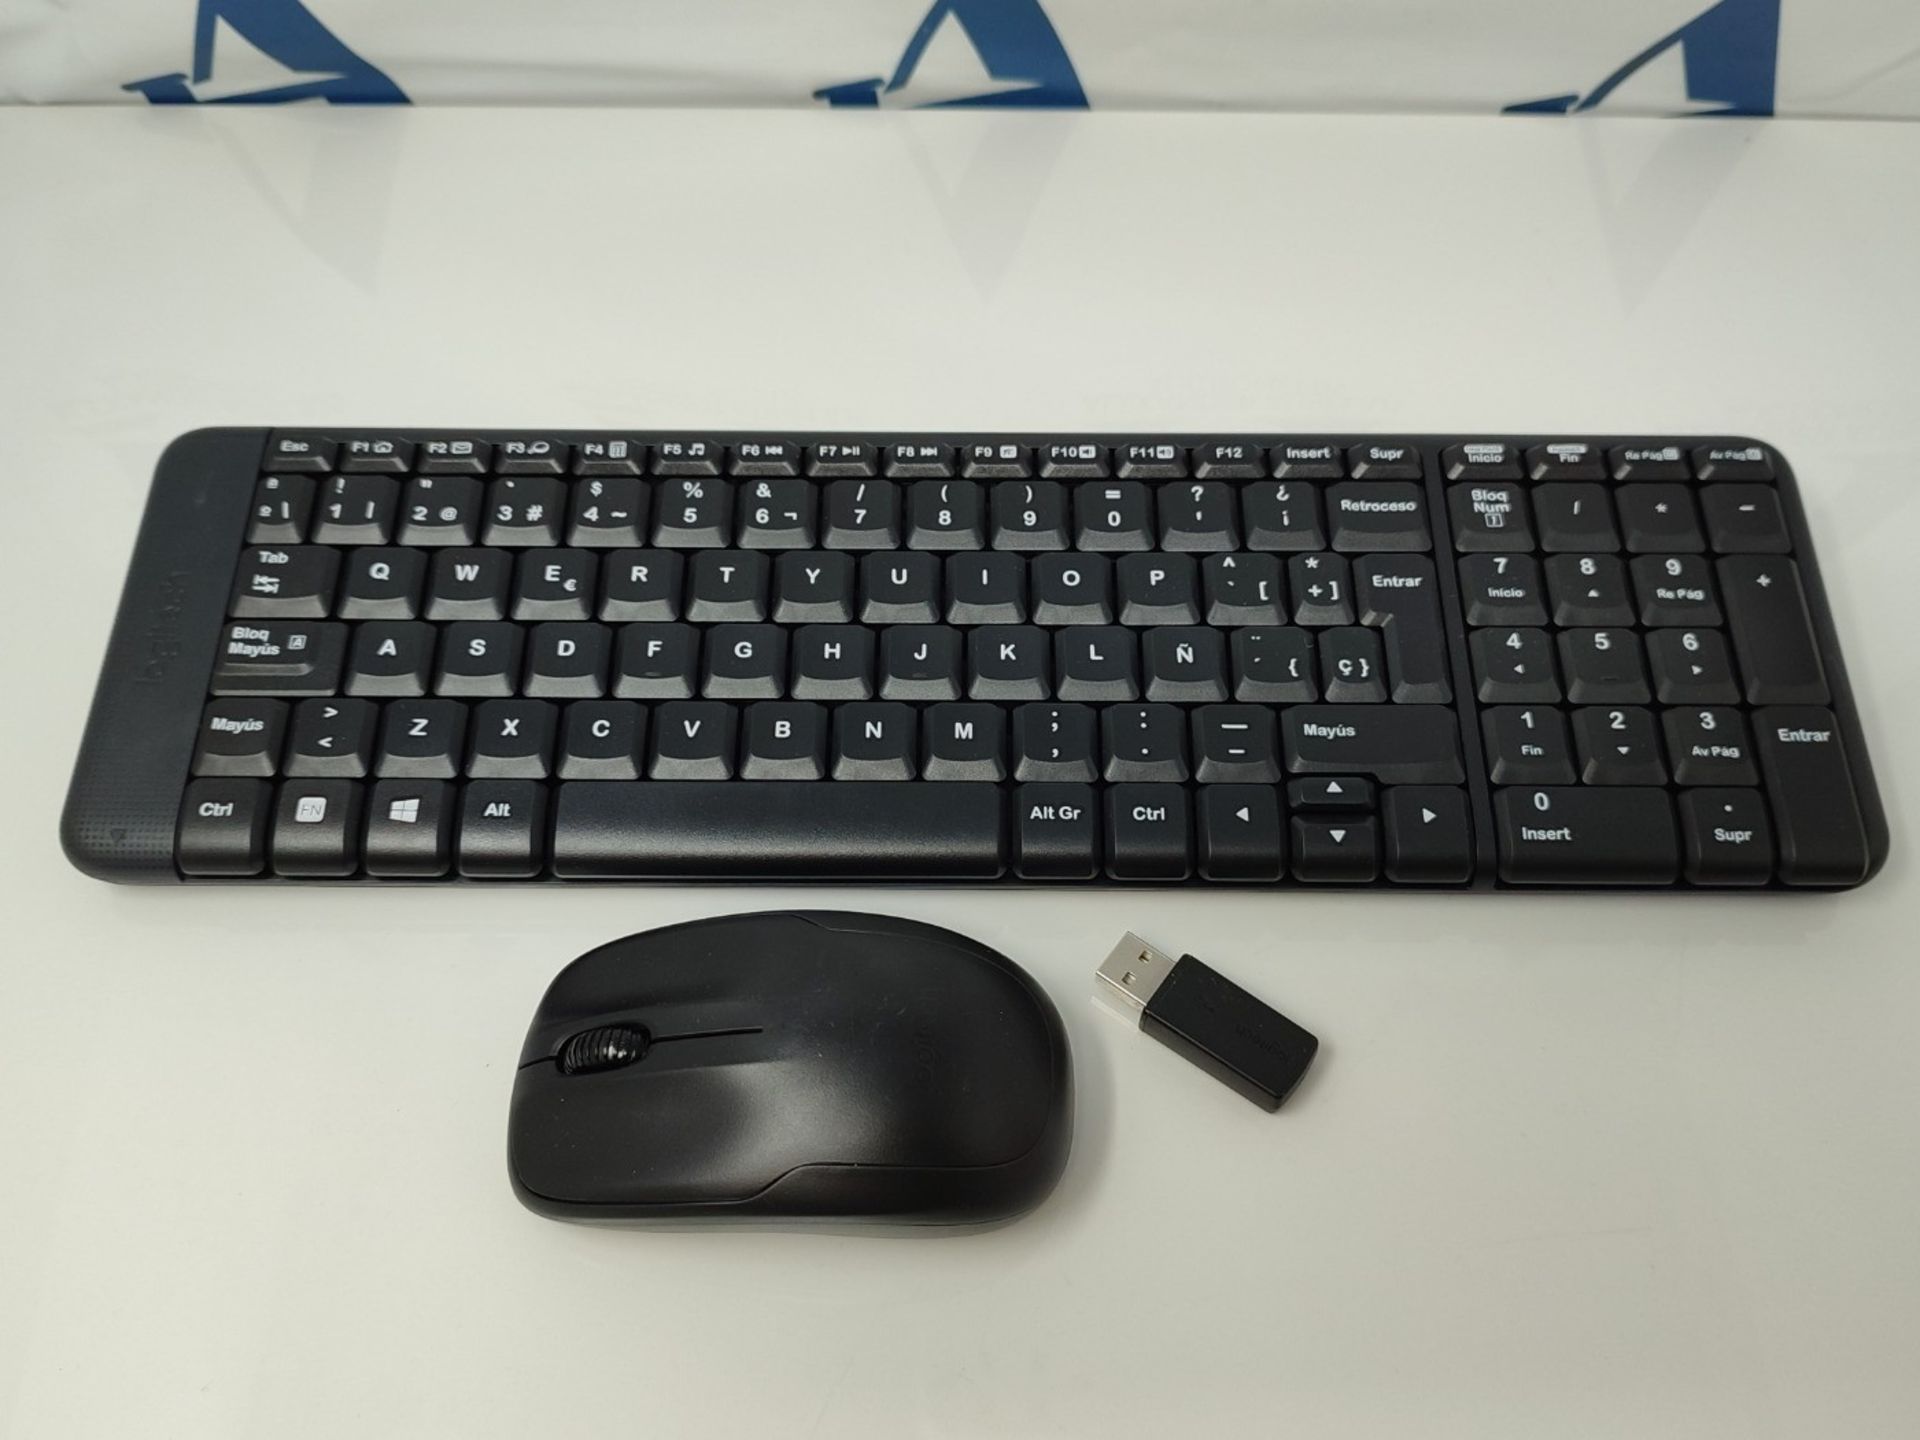 Logitech MK220 Compact Wireless Keyboard and Mouse Combo, QWERTY Spanish Layout - Blac - Image 2 of 3